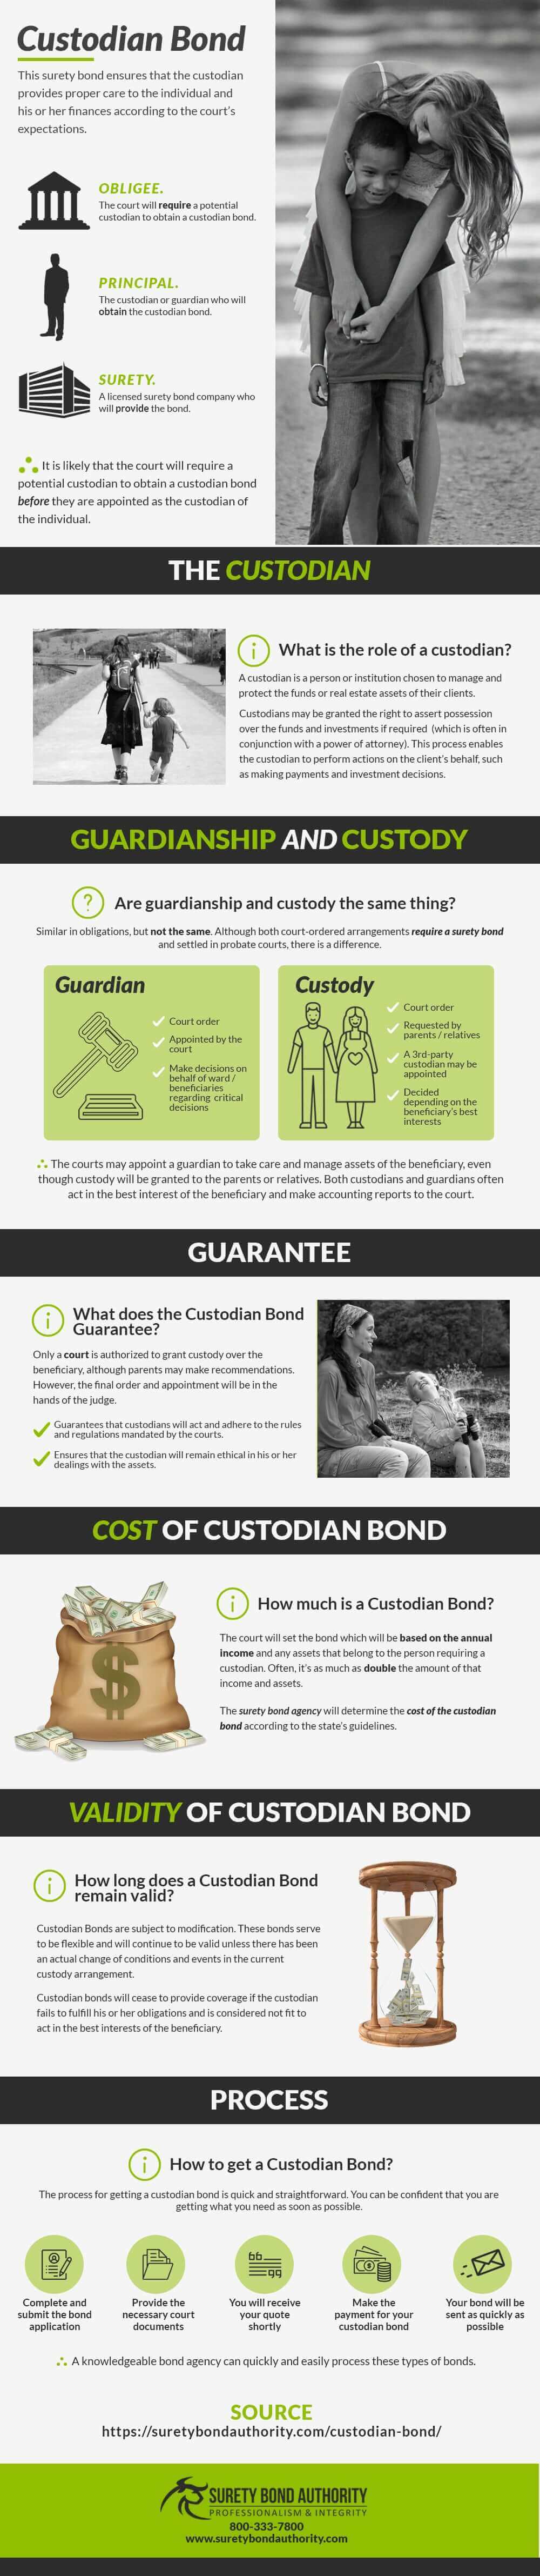 Custodian Bond Infographic